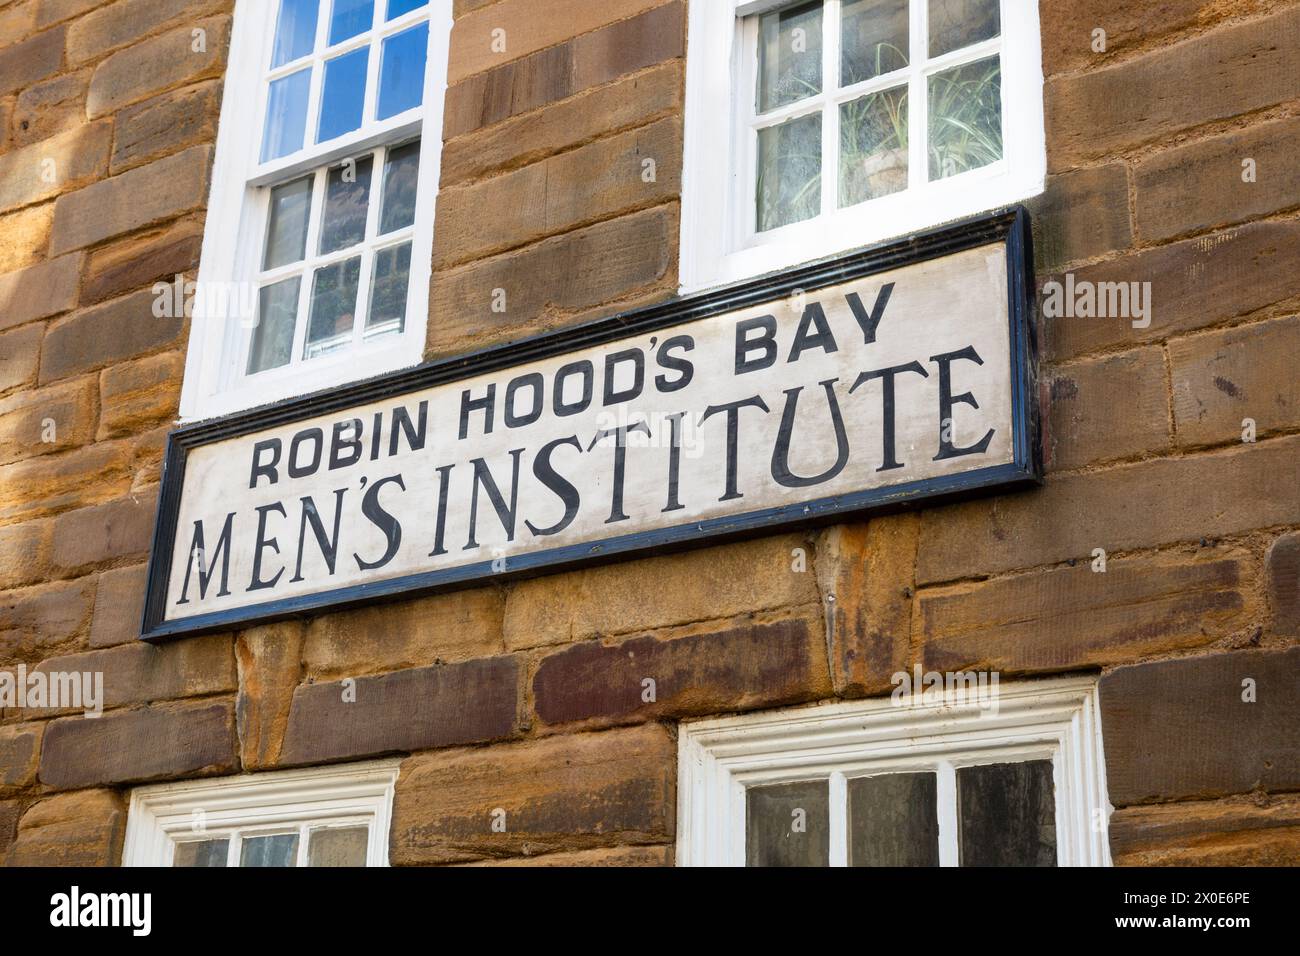 Robin hood's bay, Men's Institute, North Yorkshire, UK Stock Photo